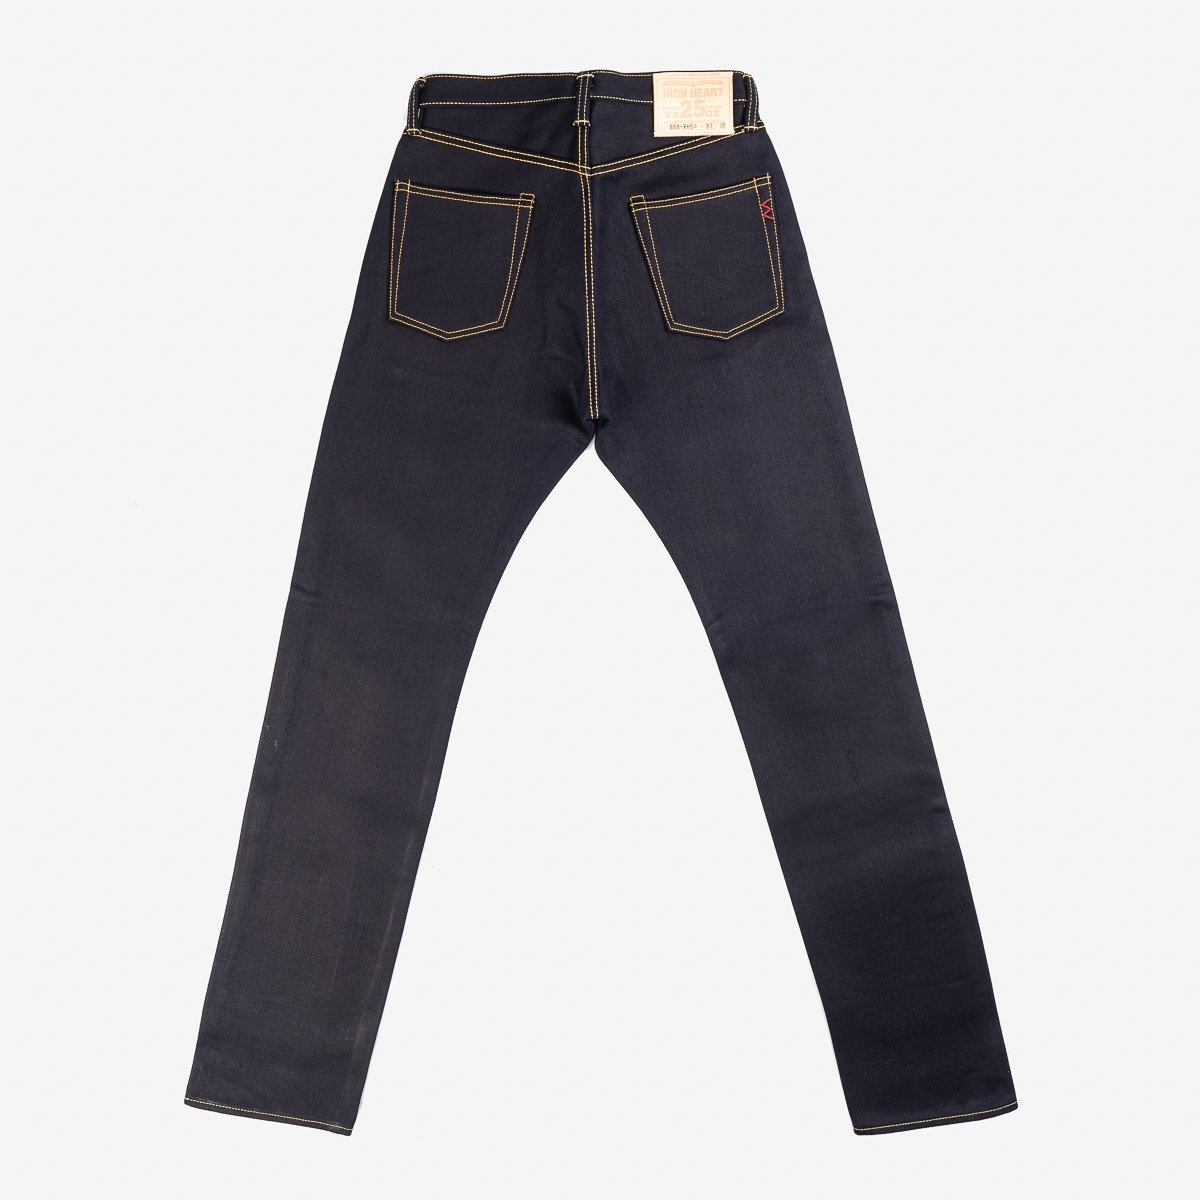 IH-888-XHSib 25oz Selvedge Denim Medium/High Rise Tapered Cut Jeans - Indigo/Black - 5